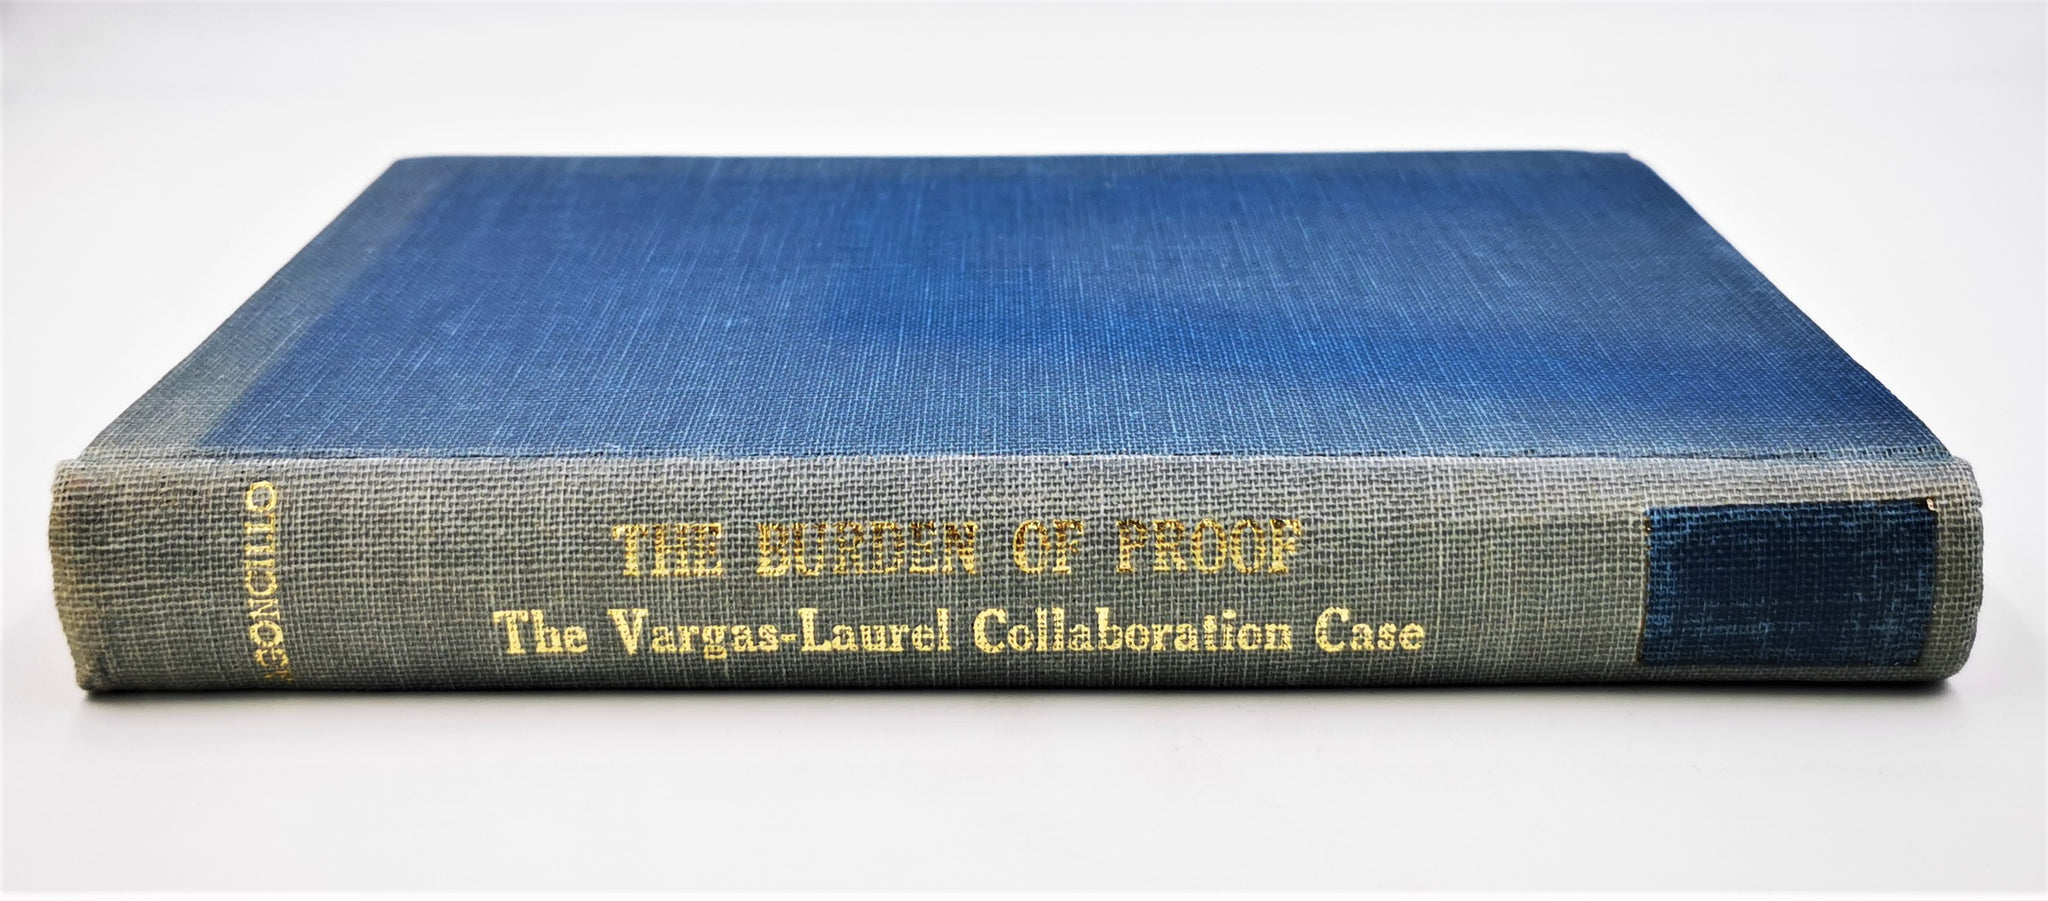 The Burden of Proof: The Vargas-Laurel Collaboration Case